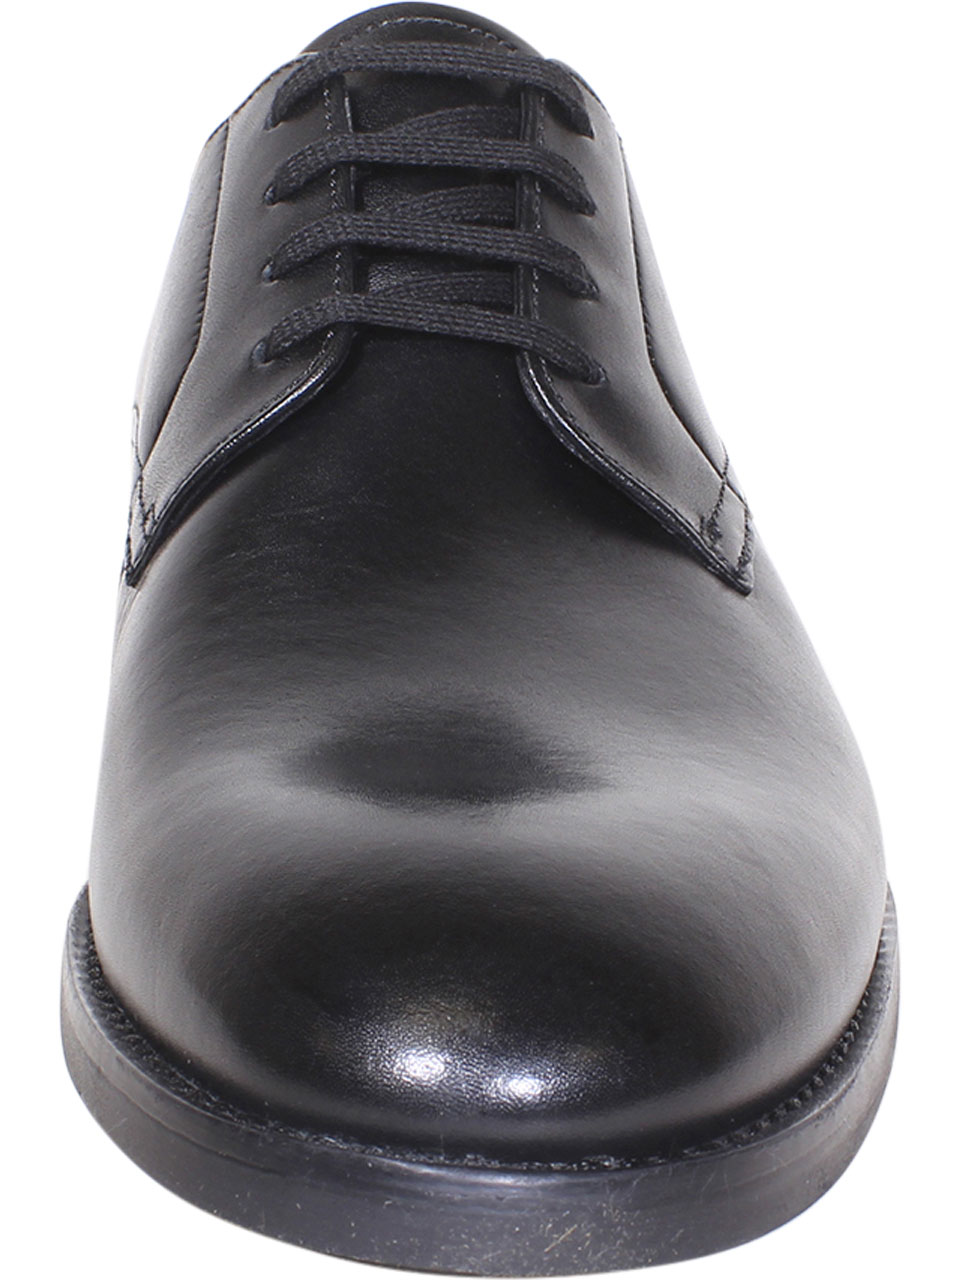 Clarks Craftmaster Ronnie Walk Oxfords Black Men's Shoes Sz: 10.5 ...